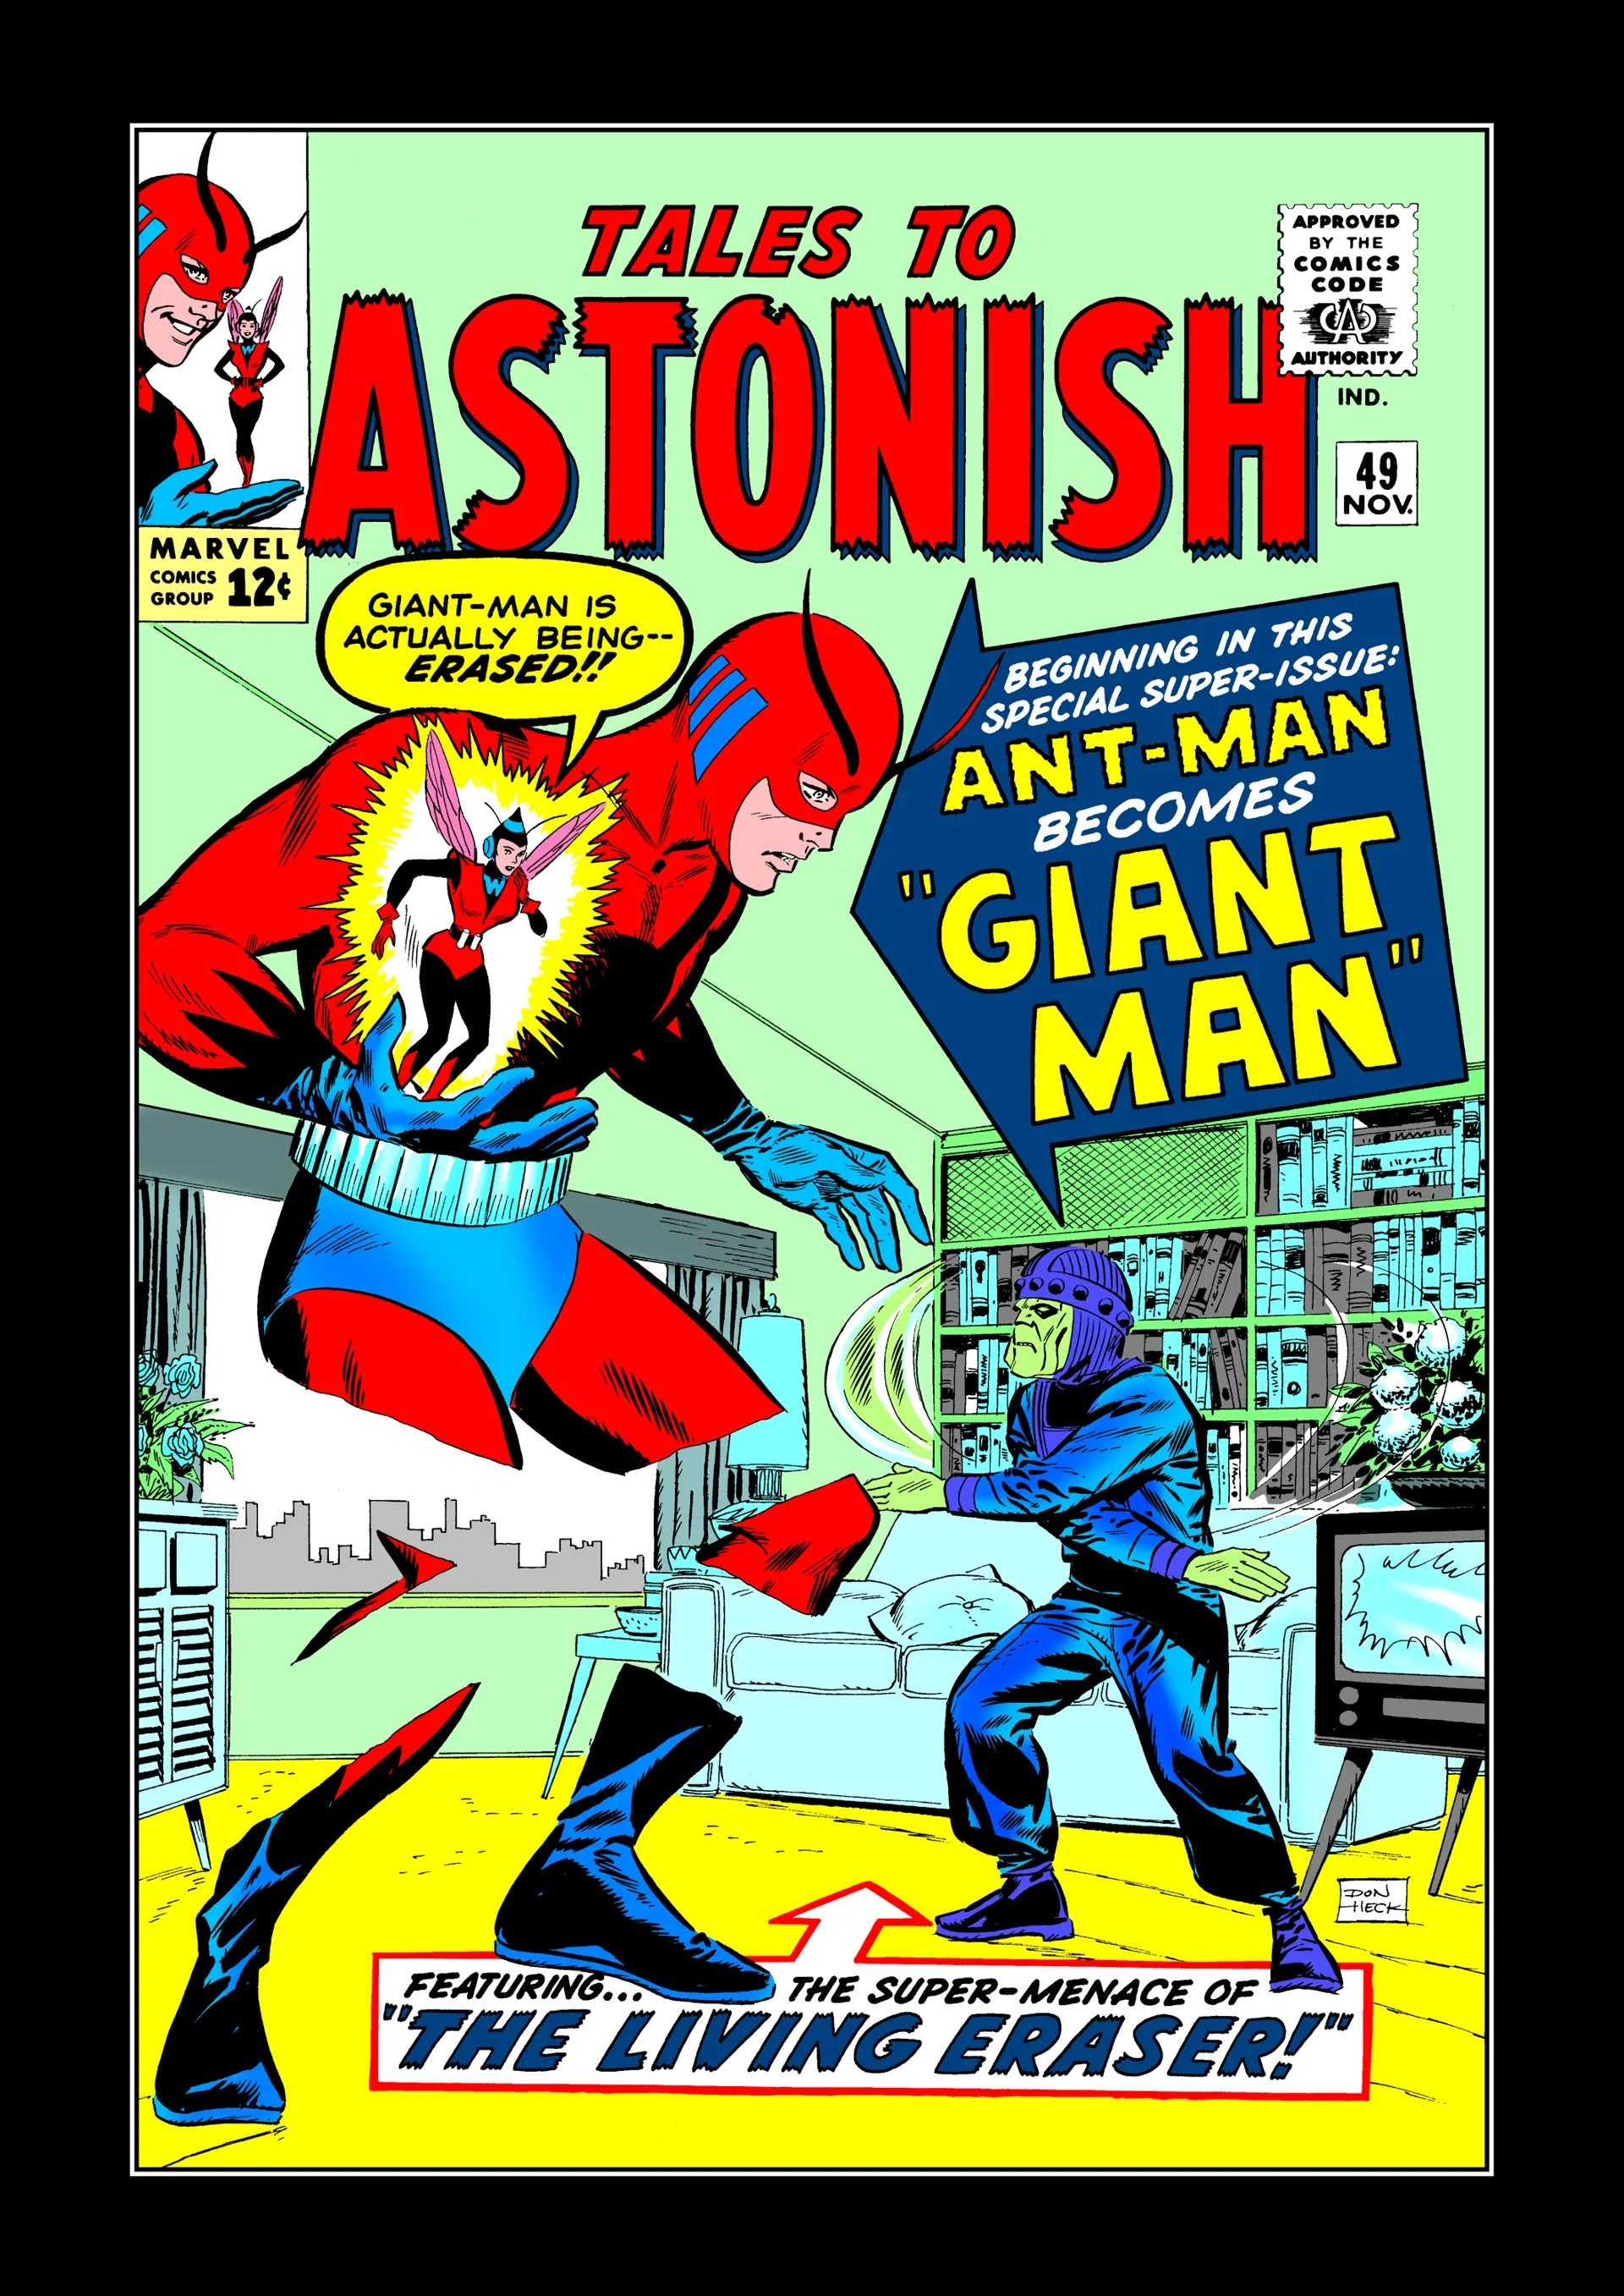 Marvel Legends: Ant Man - Giant Man 24 Pulgadas Exclusivo Haslab